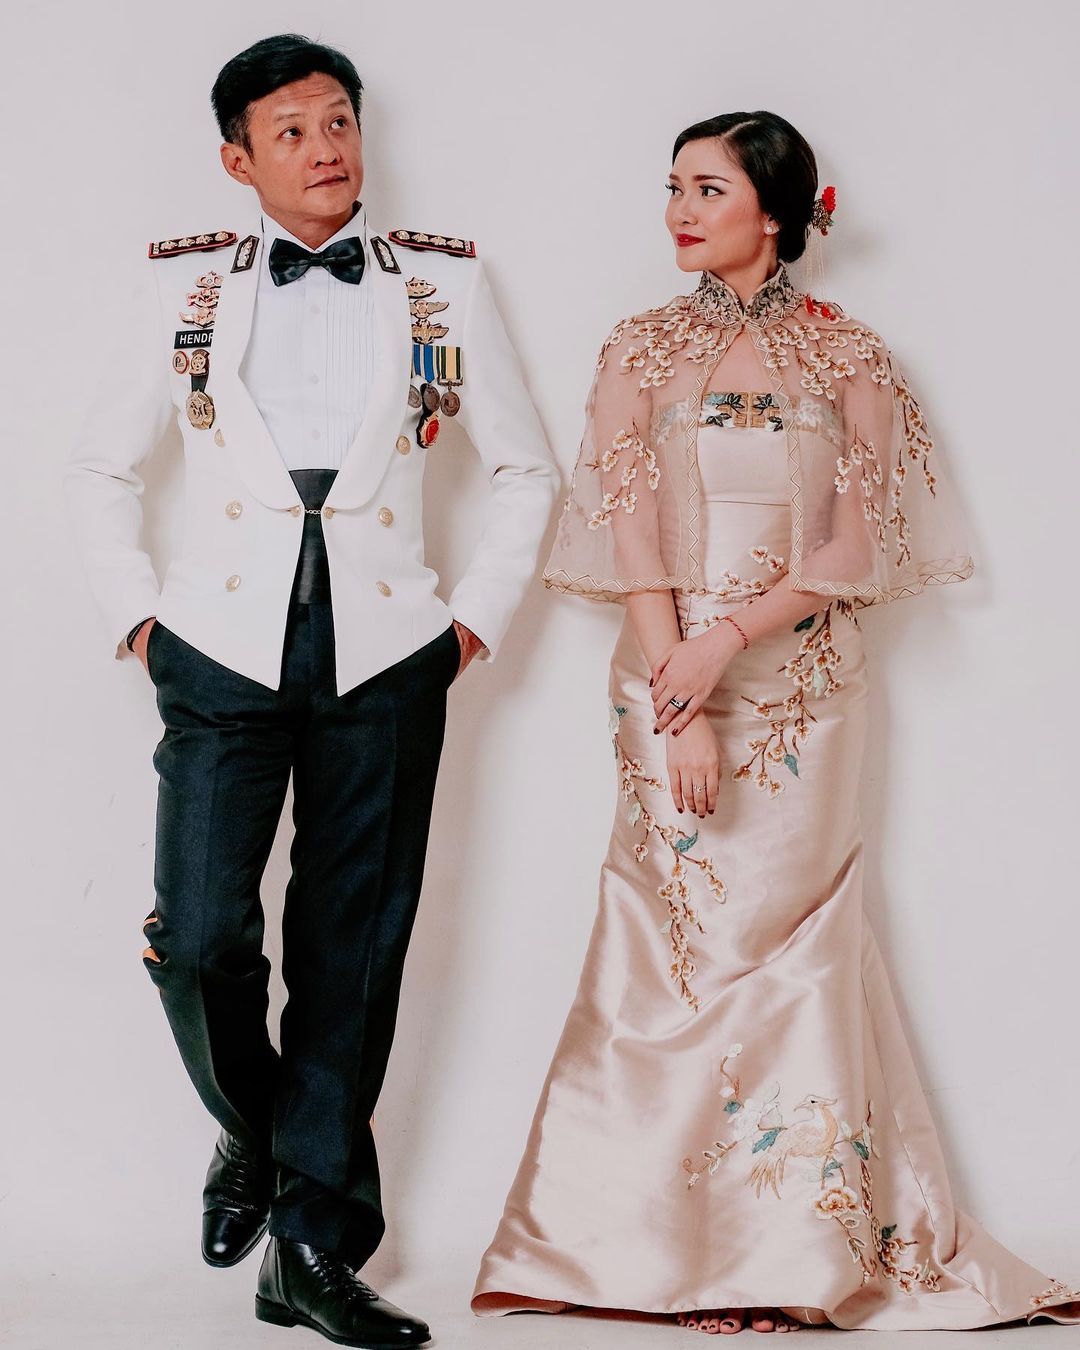 Brigadier General Hendra Kurniawan and his wife, Seali Syah.